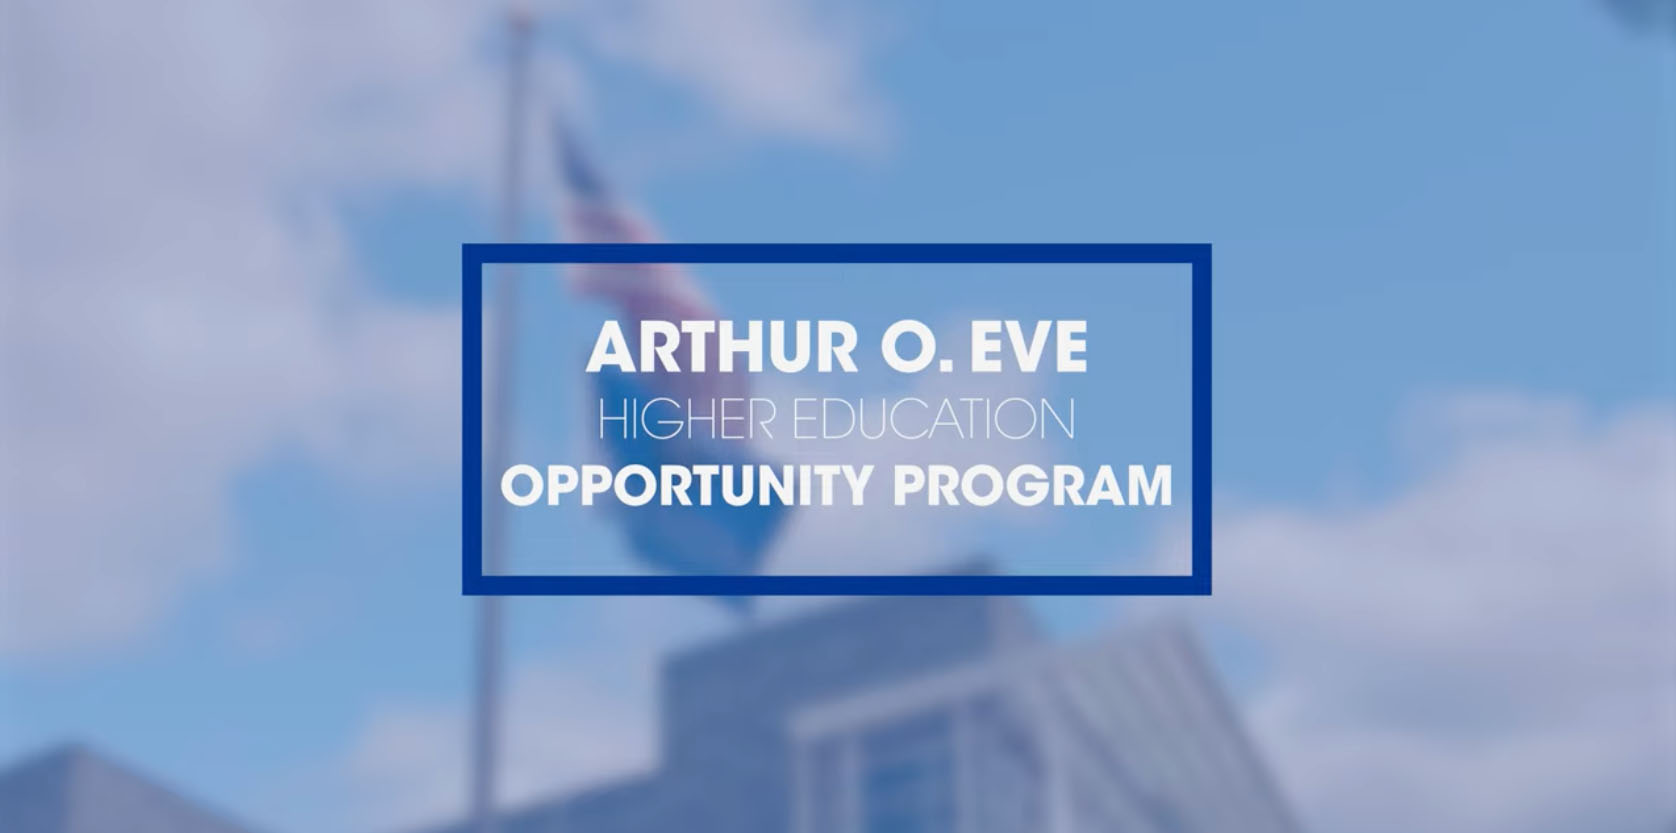 Arthur O. Eve Higher Education Opportunity Program